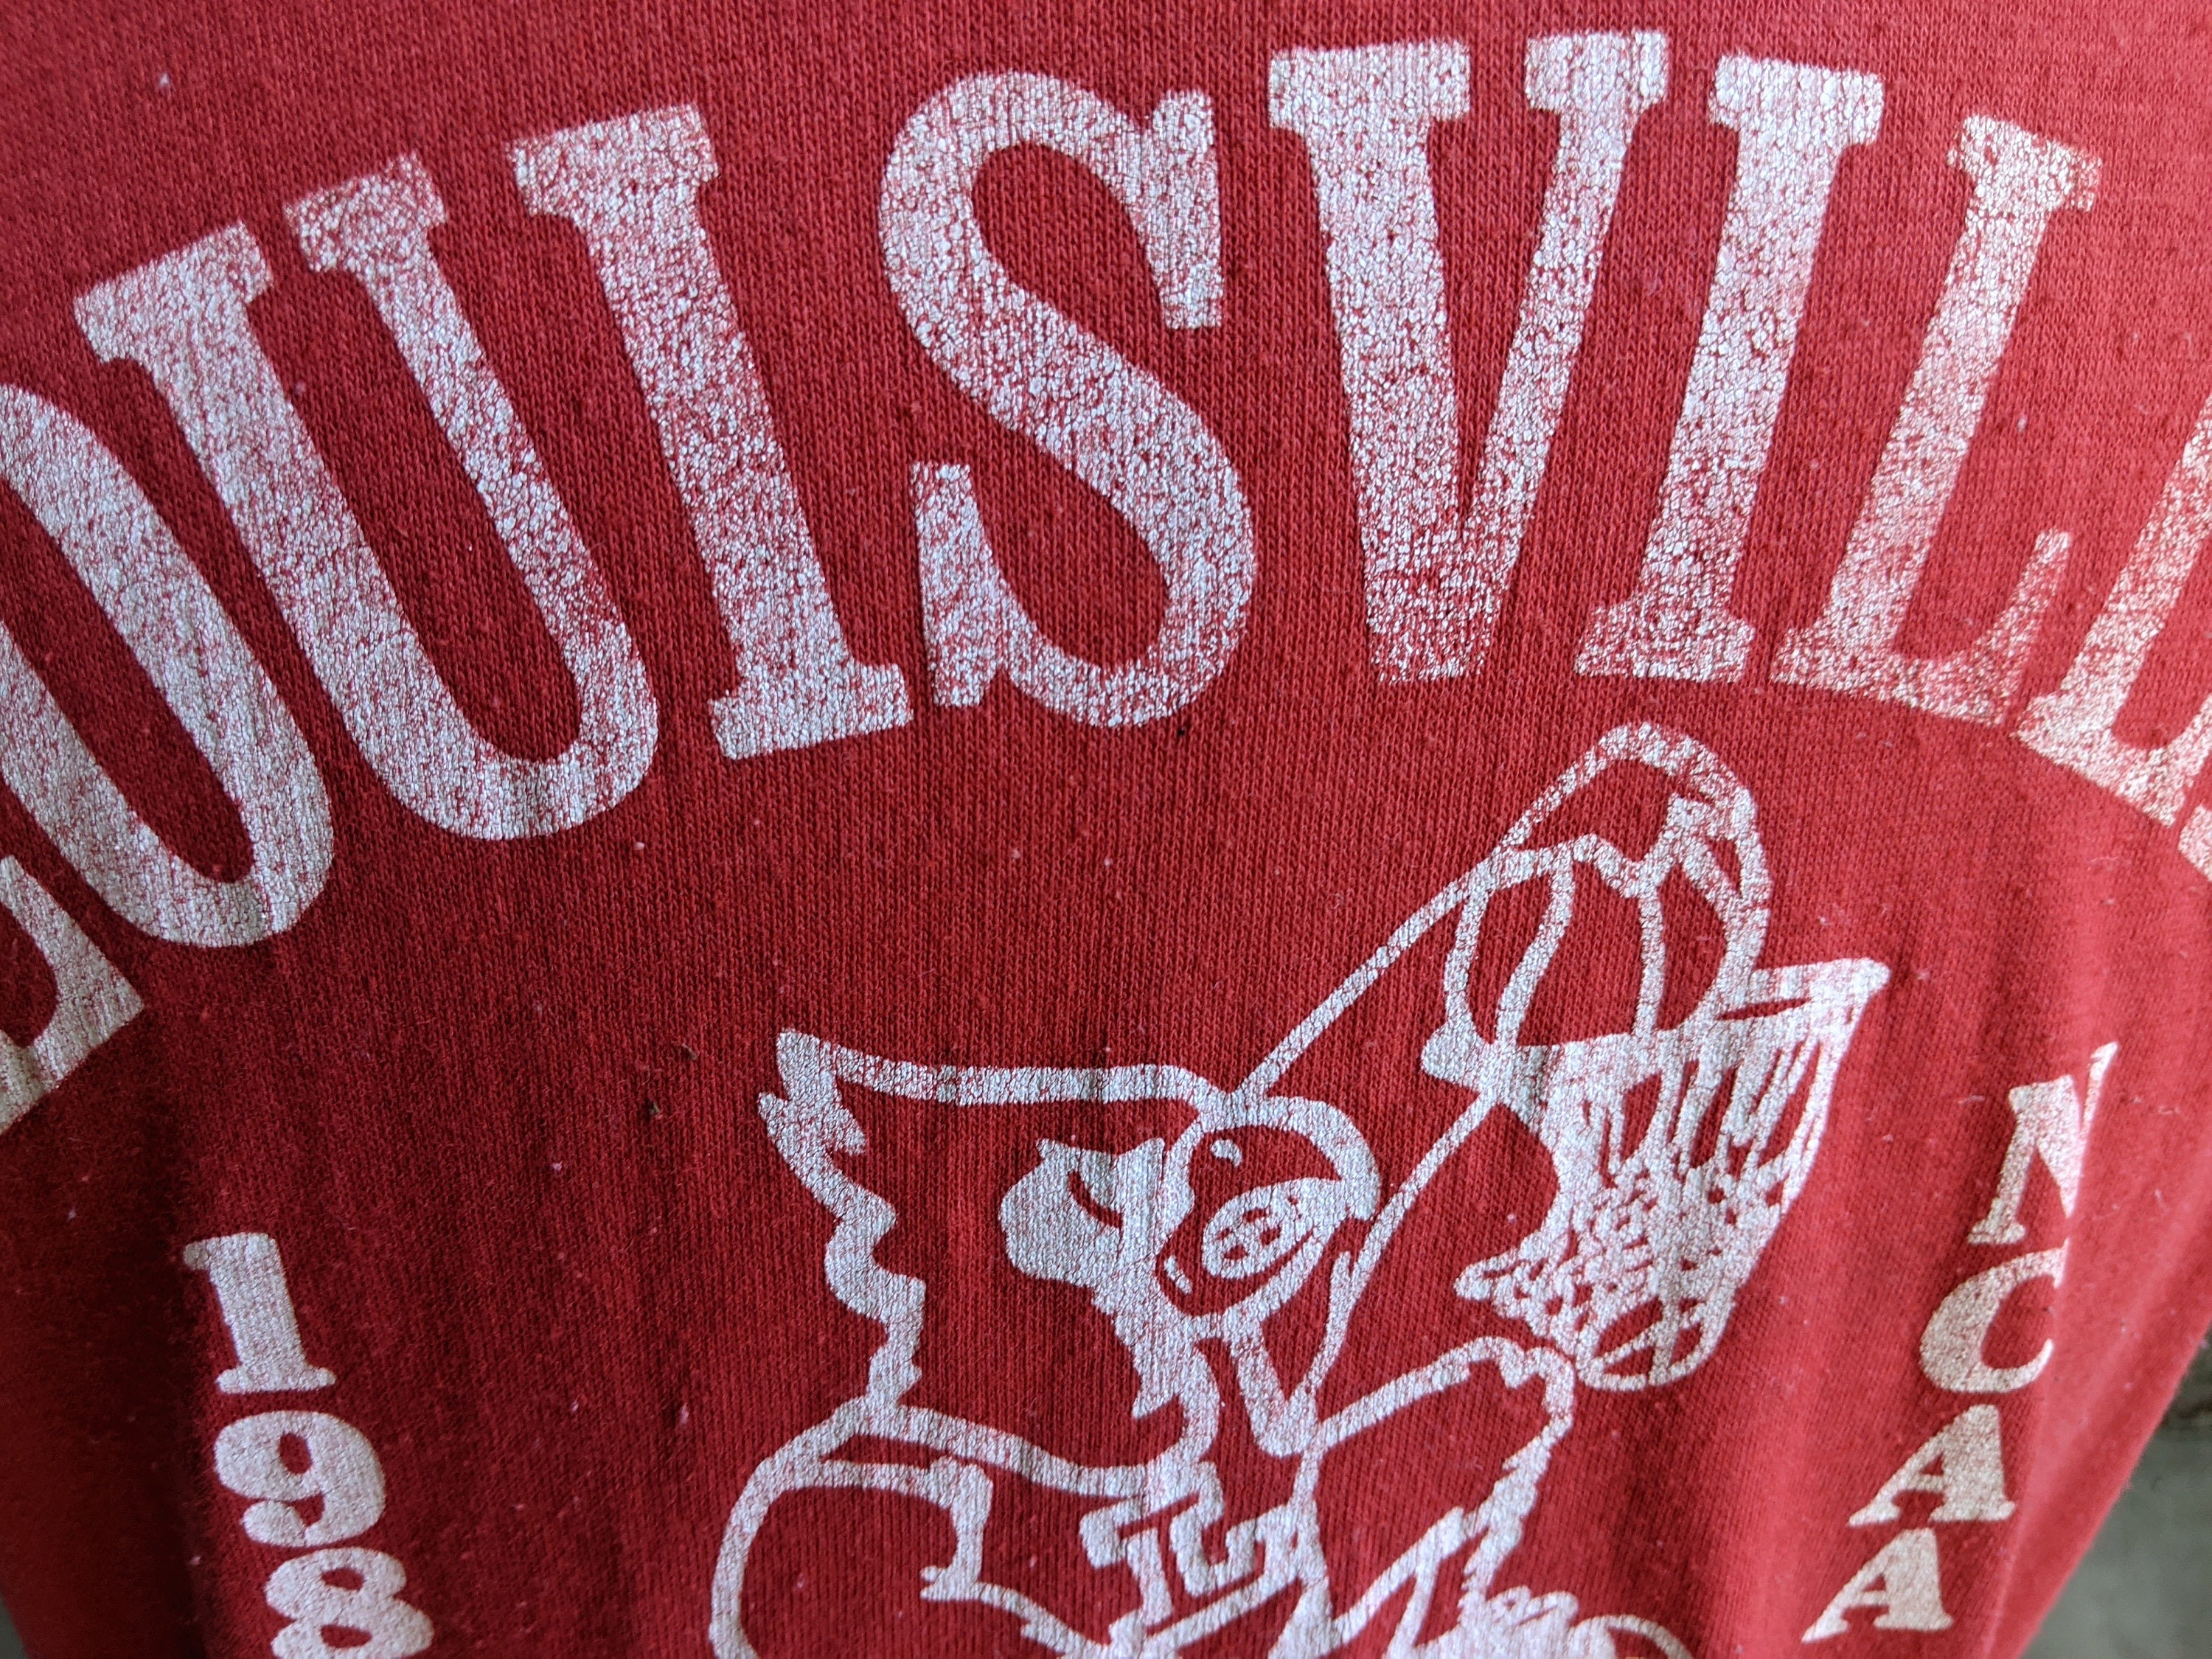 Rare Vintage Louisville Cardinals 1980 NCAA Champions T Shirt -  Sweden